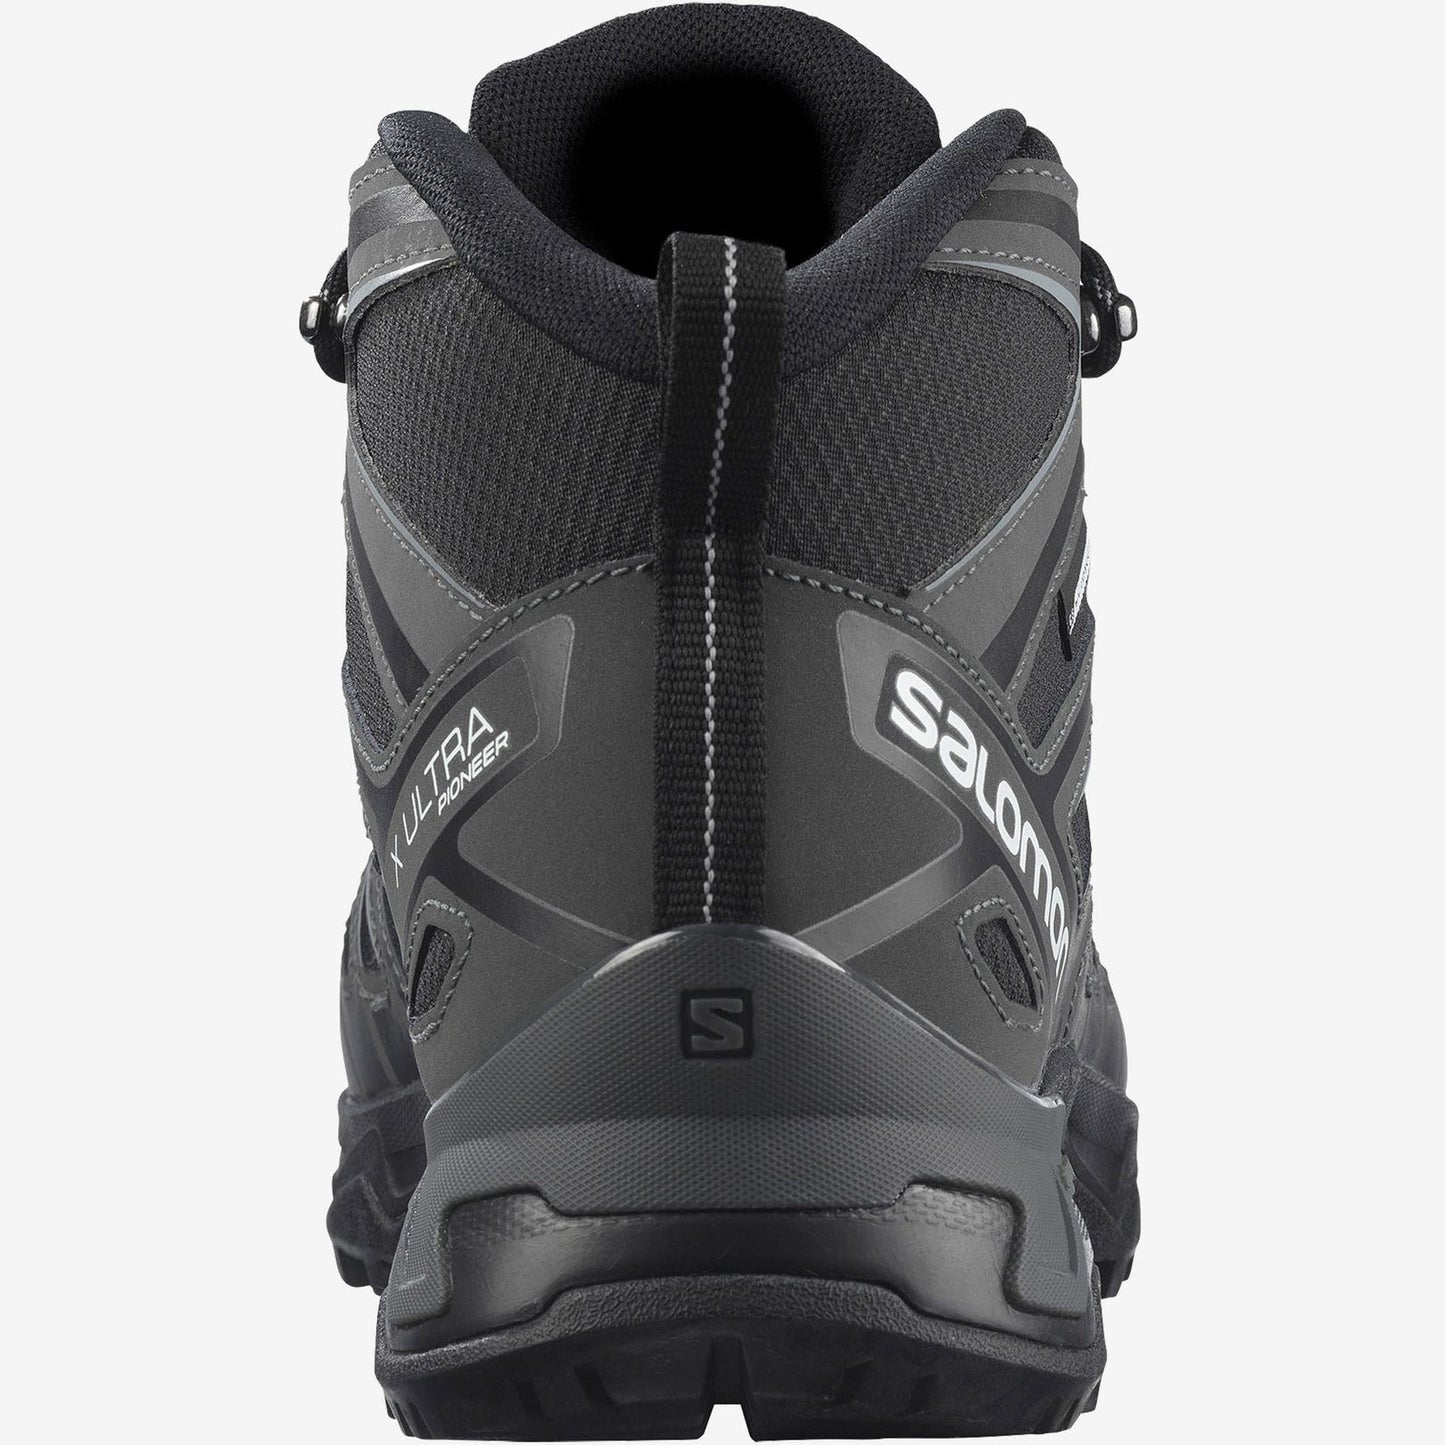 Salomon Men's X Ultra Pioneer Climasalomon Mid Waterproof Hiking Boots